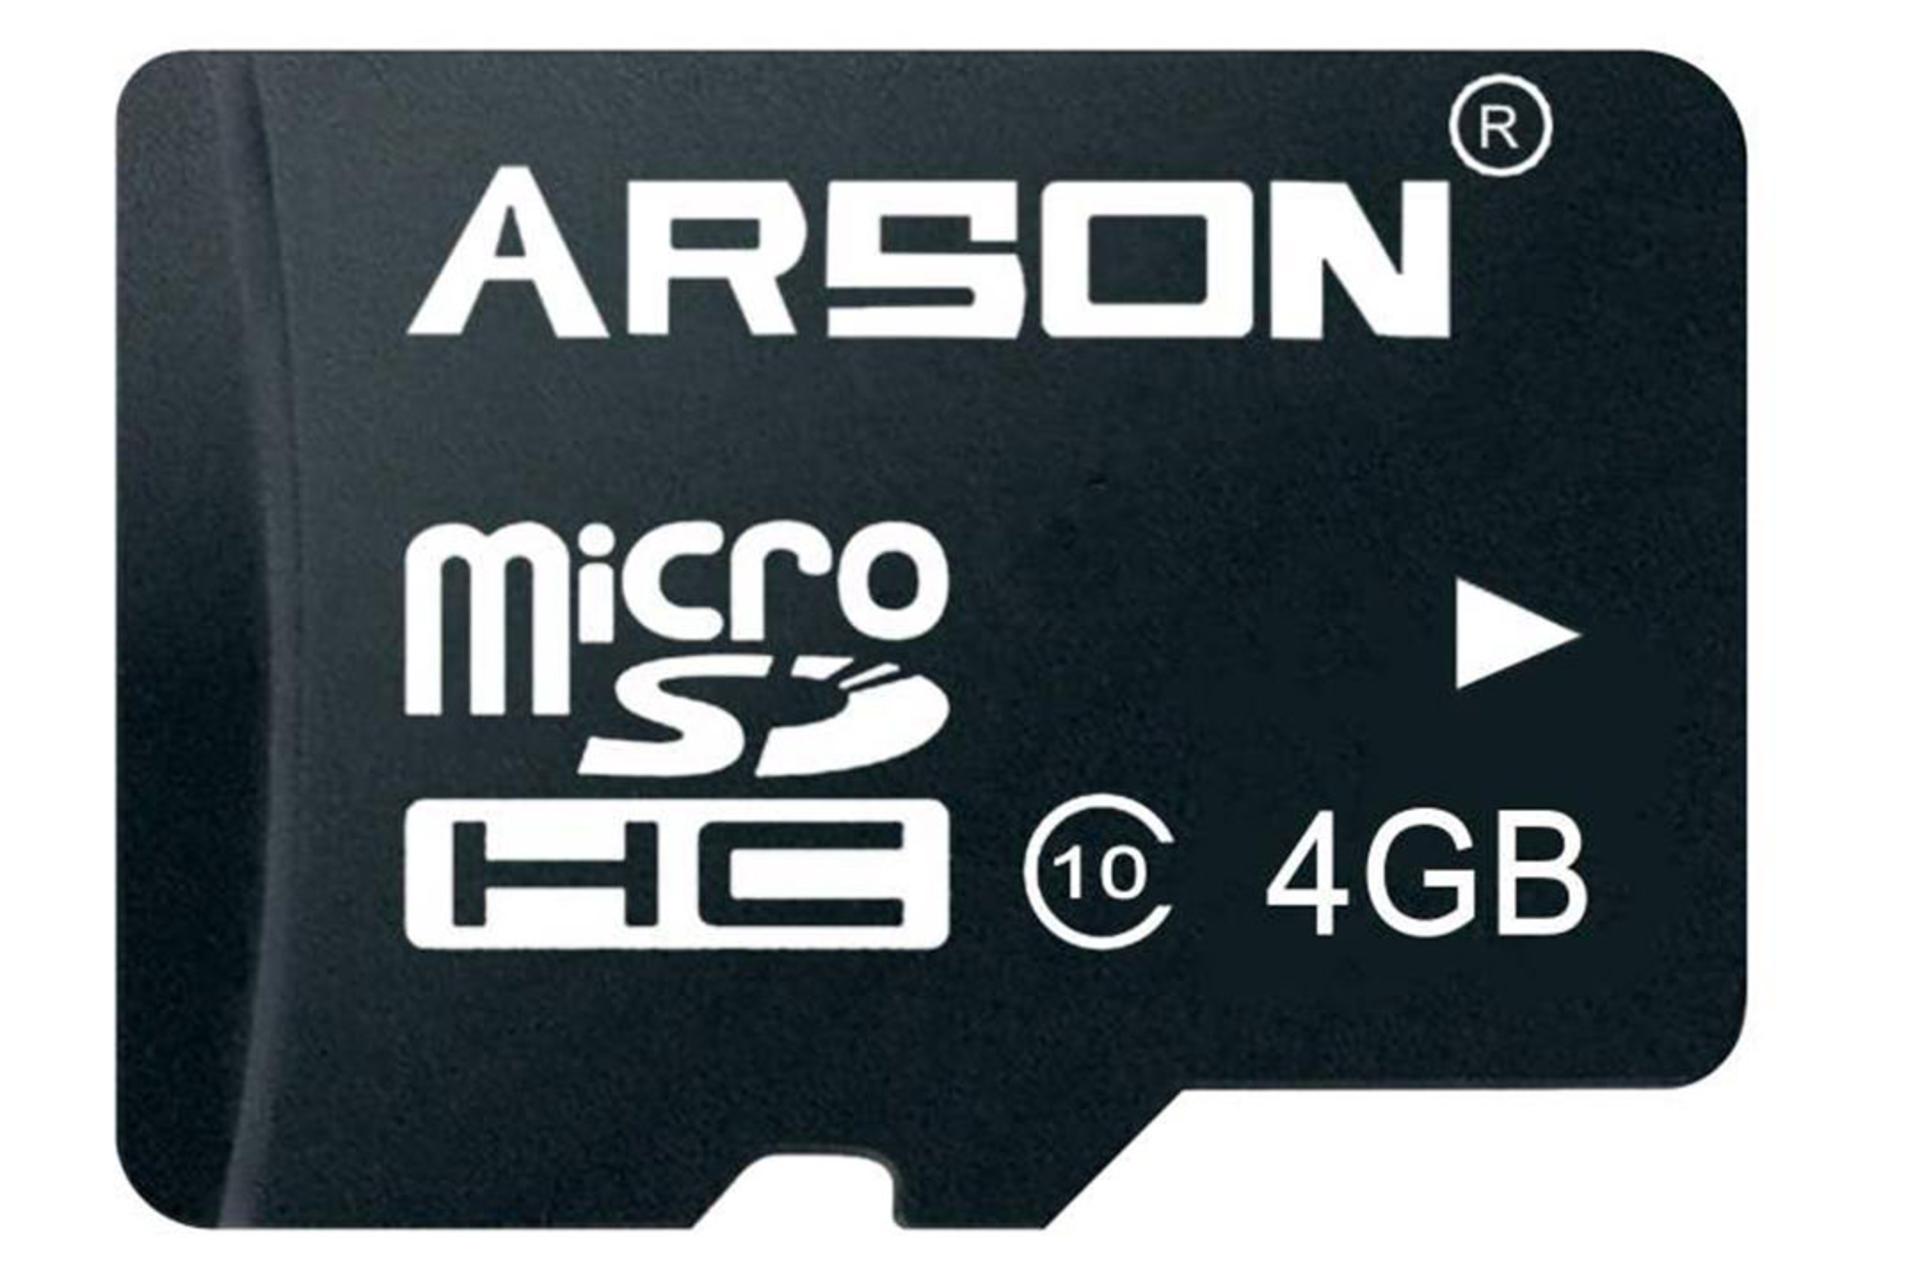 Arson AM-2104 microSDHC Class 10 4GB